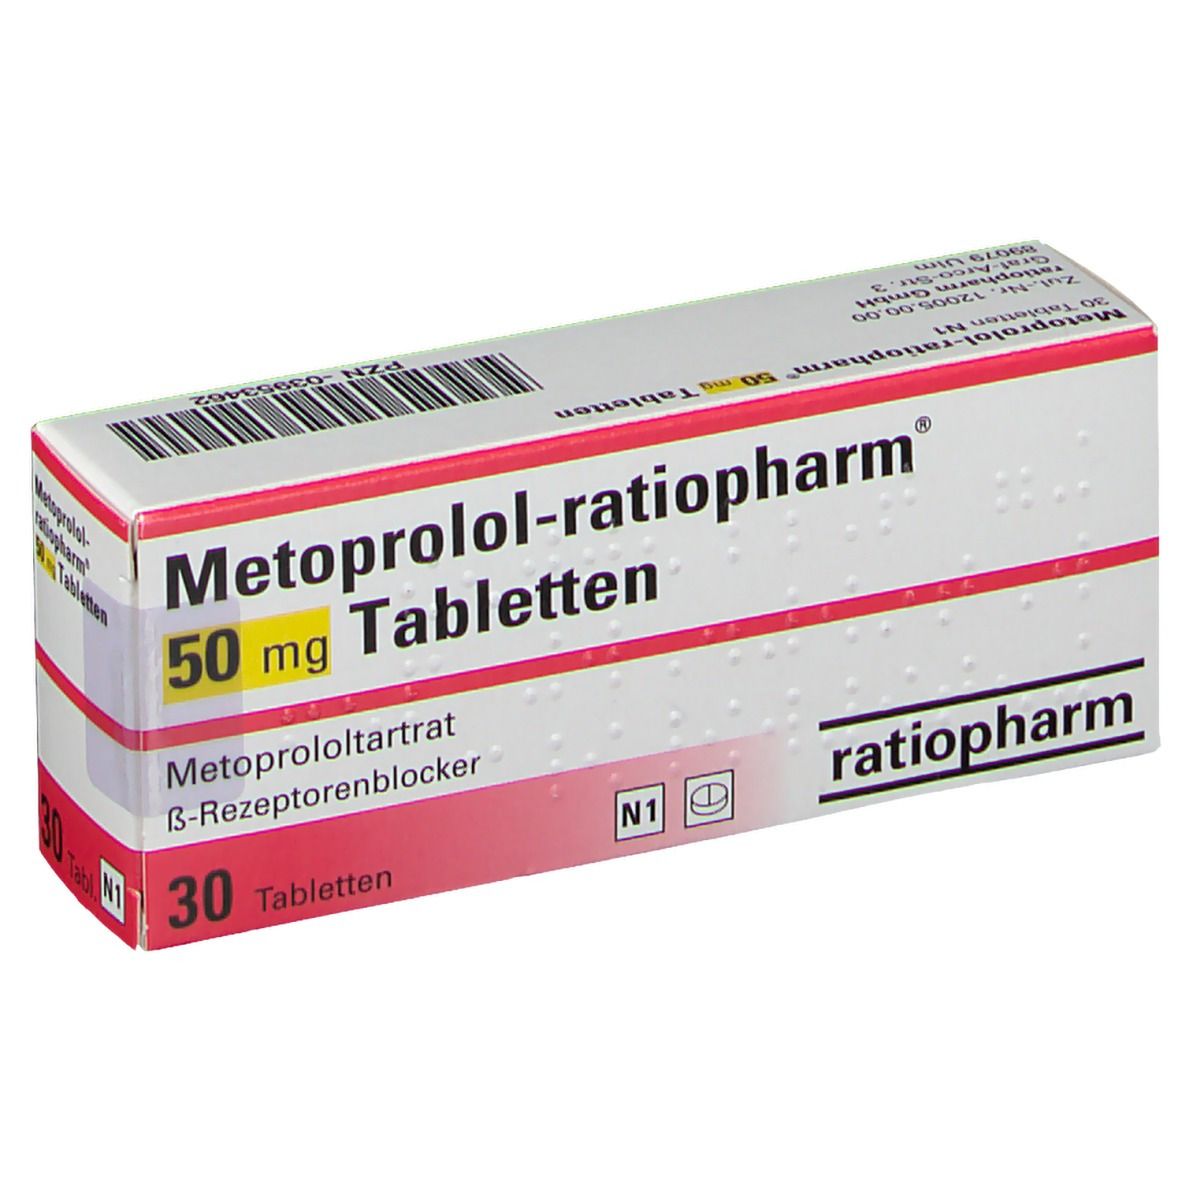 Metoprolol-ratiopharm® 50 mg